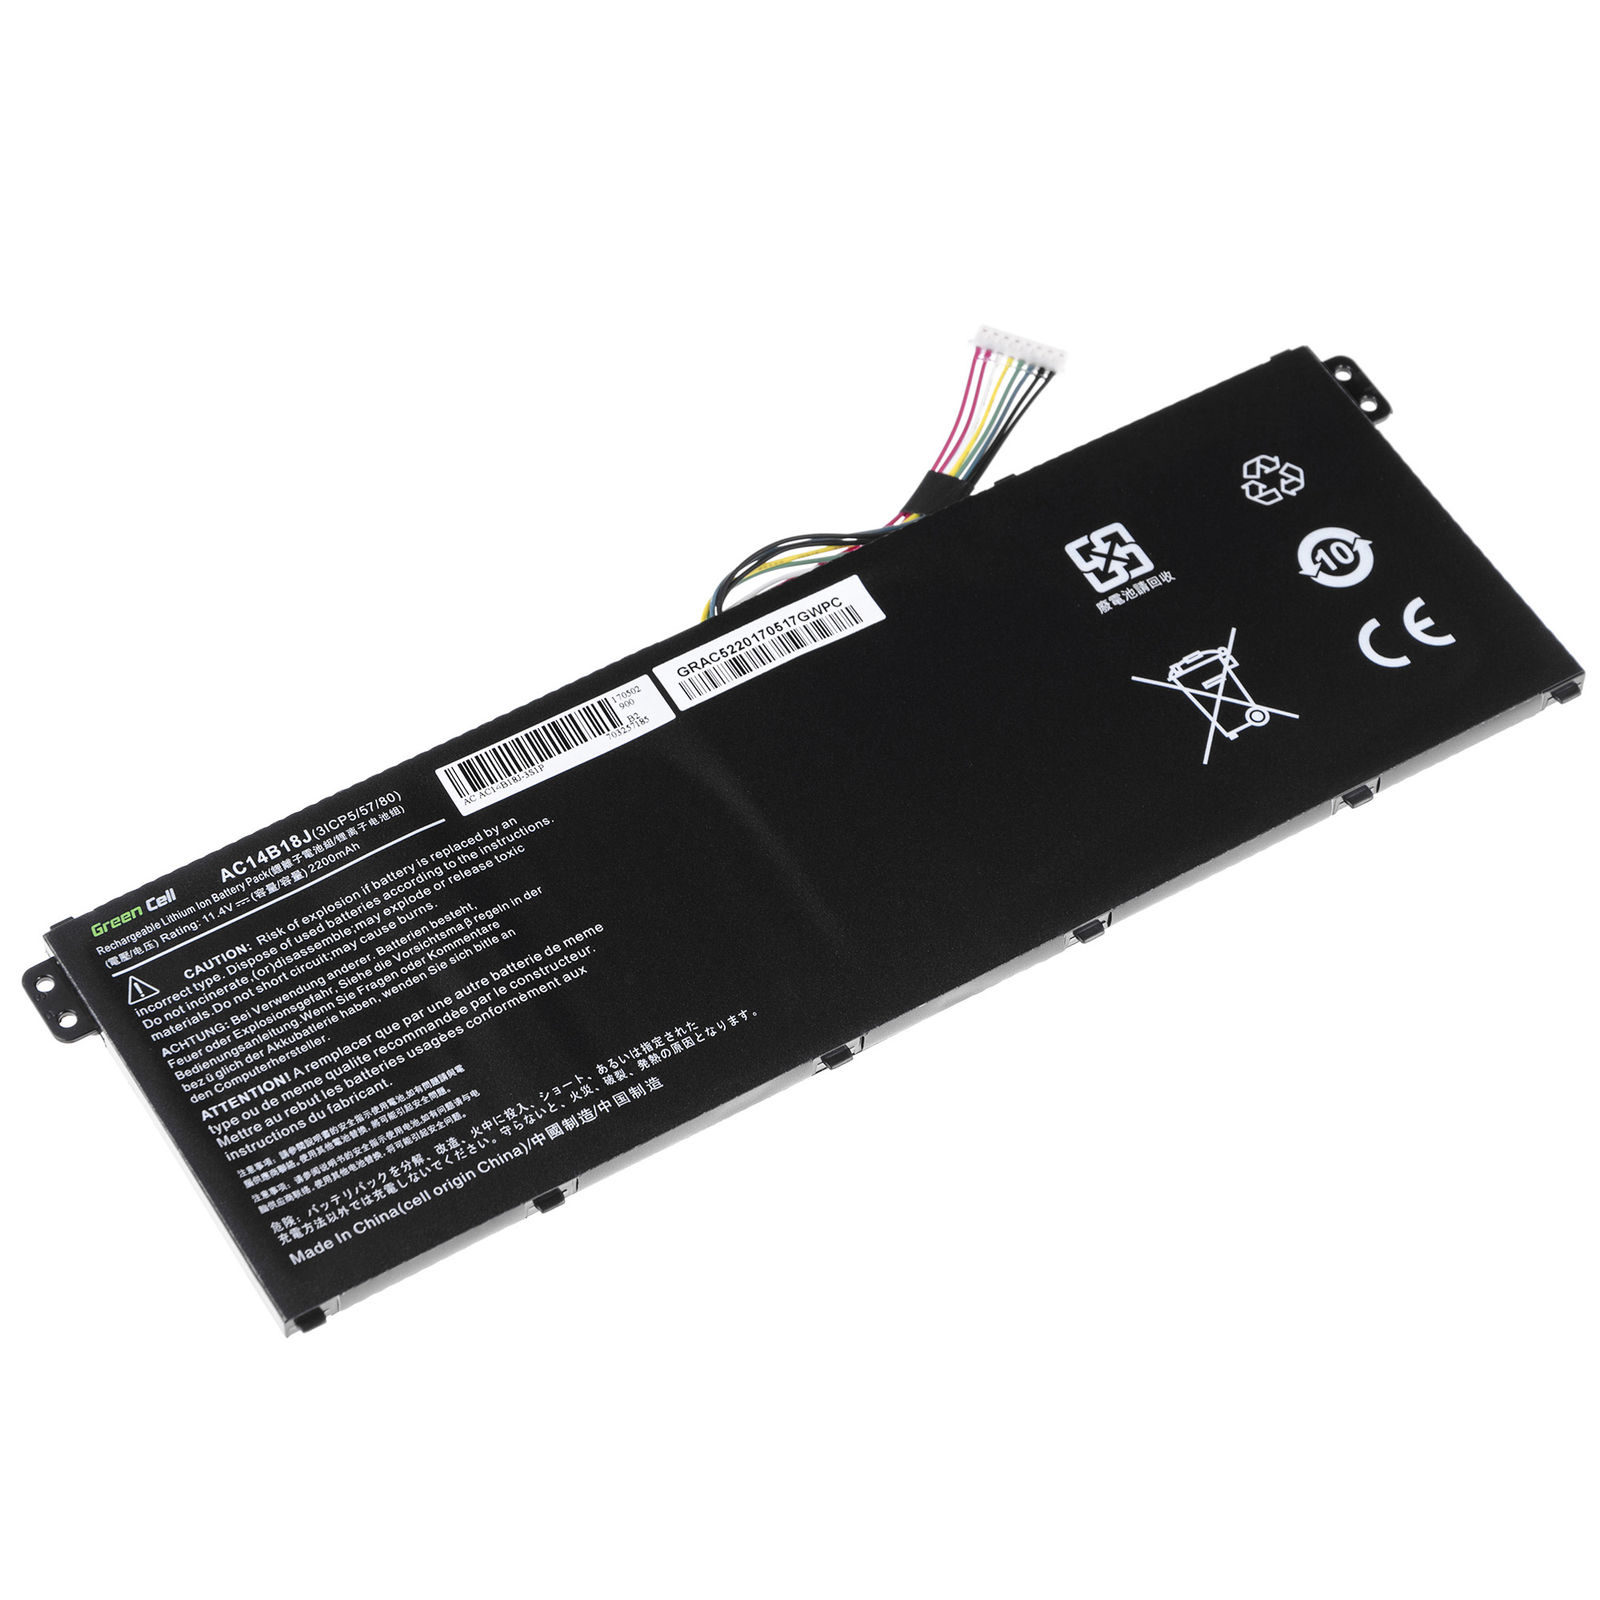 Acer Extensa 2519-P560 2200mAh compatible battery